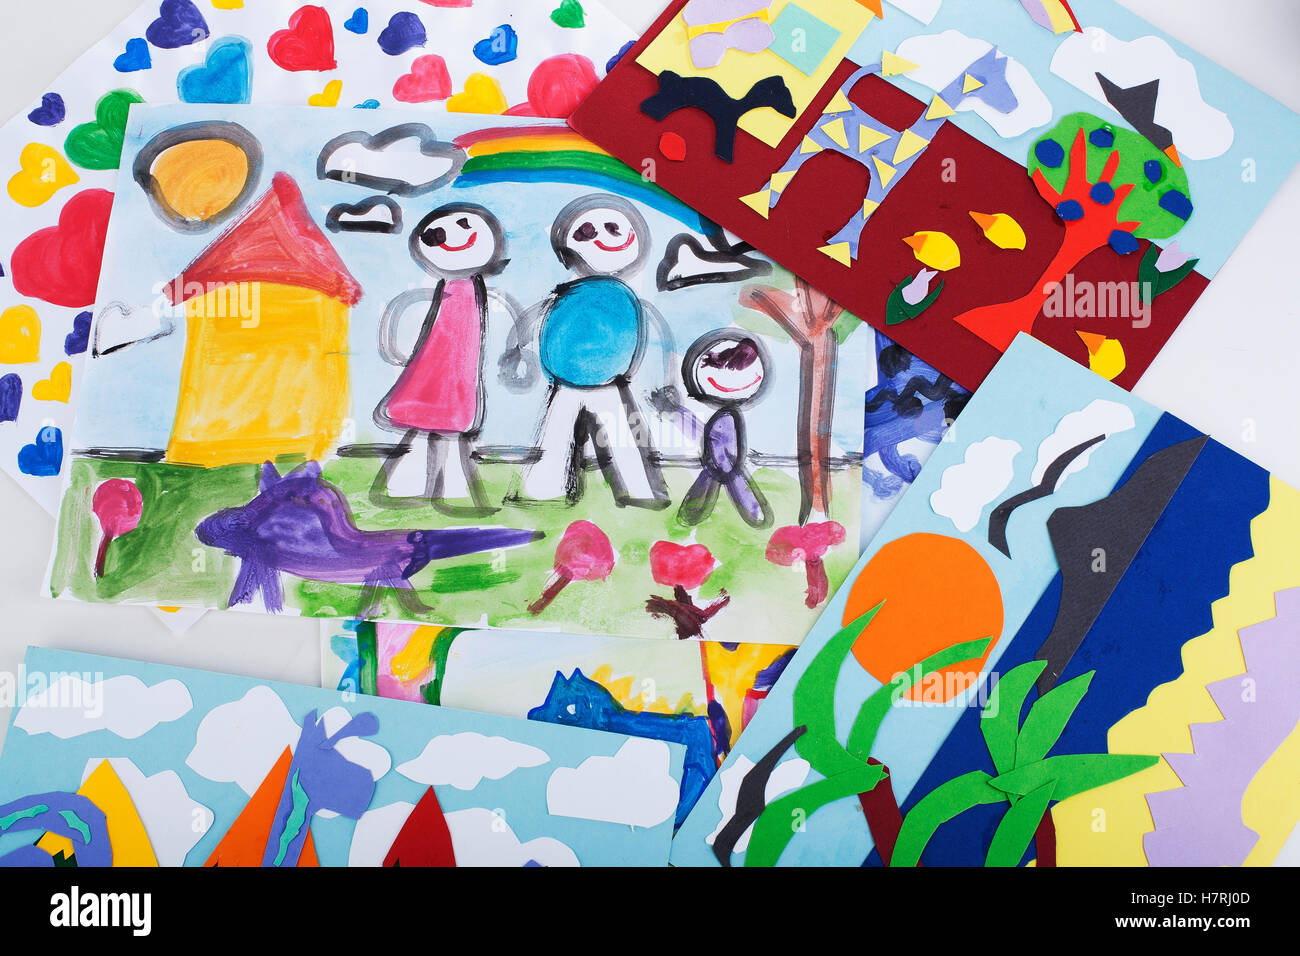 Bad Kreide Baby Doodle Farbe Kinder Malerei Diy Kreative Artoys Buntstifte Fur Kinder Pen Set Aliexpress